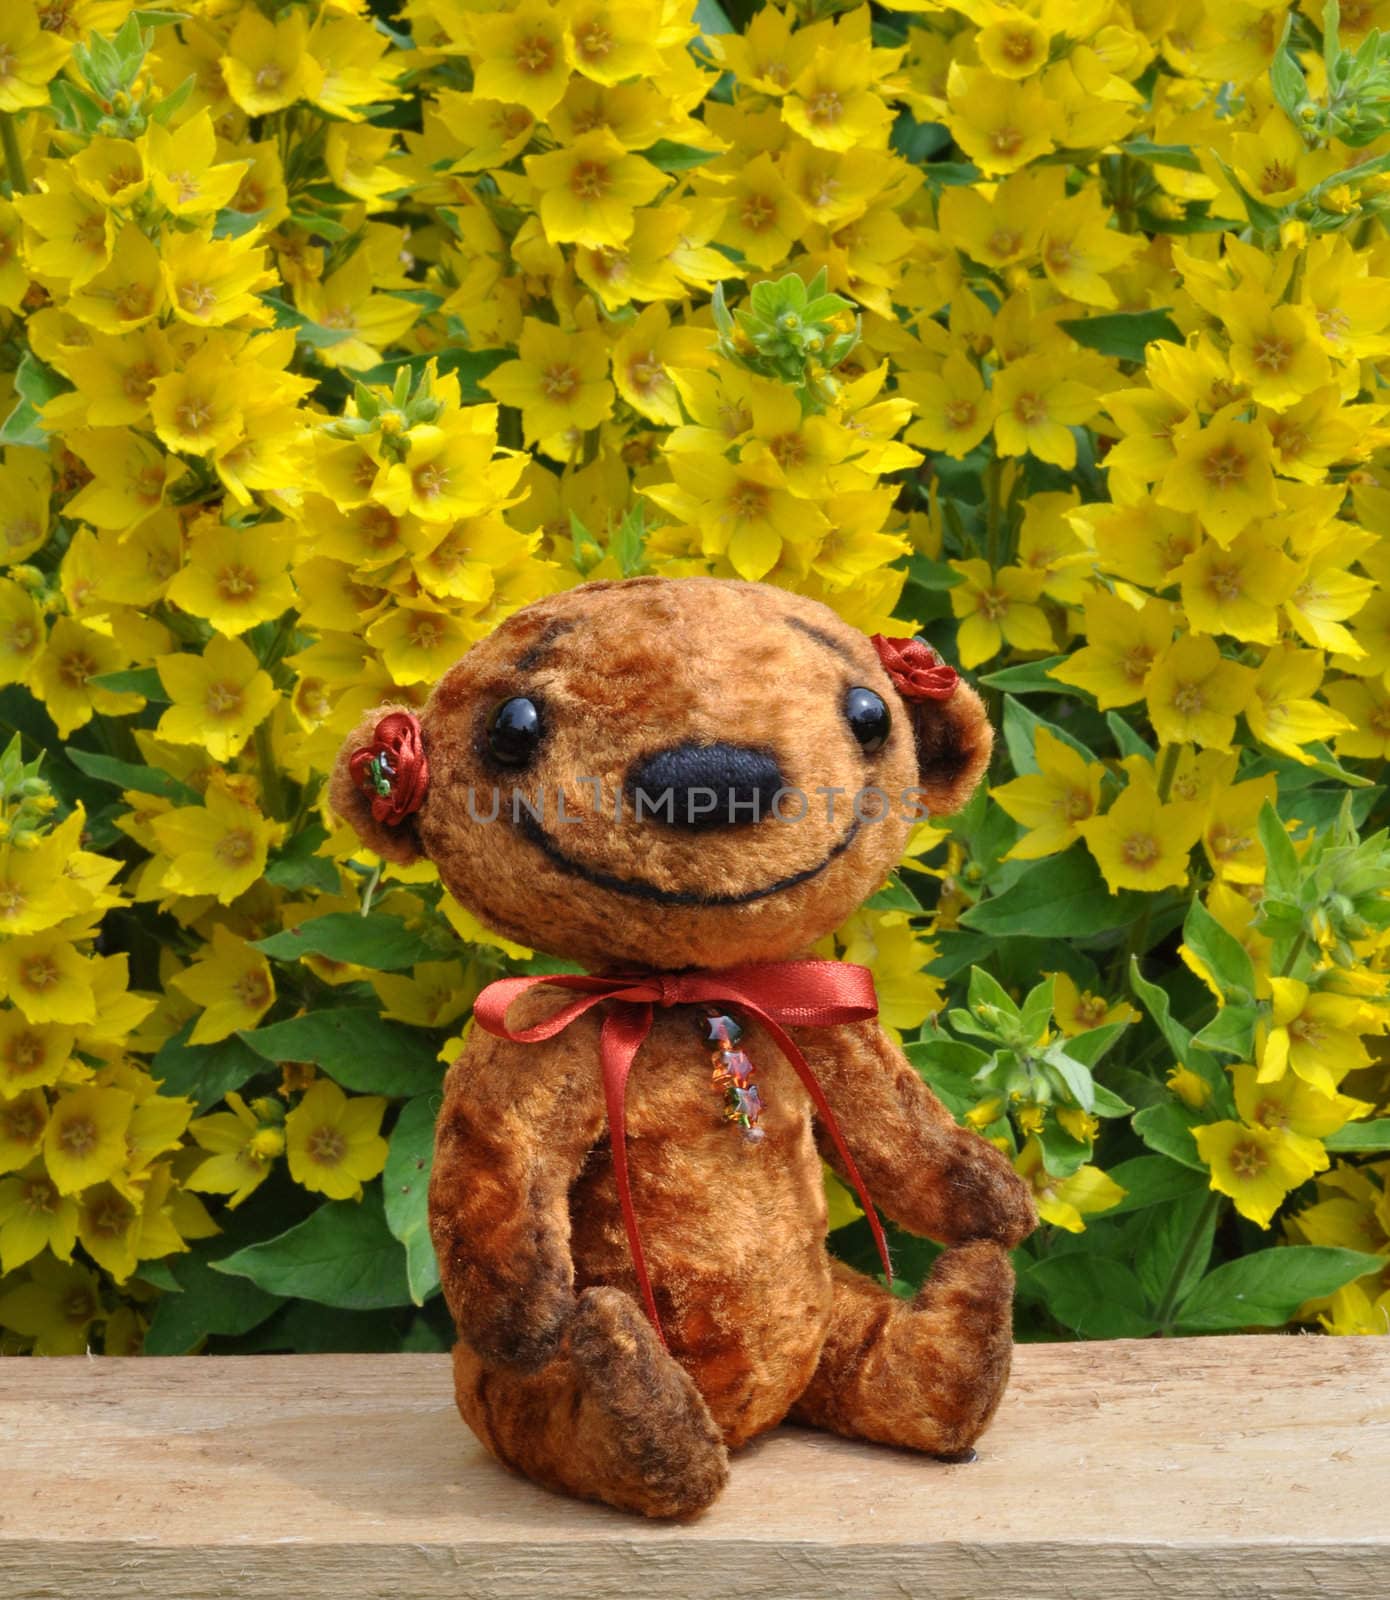 Teddy-bear Niusia by alexcoolok